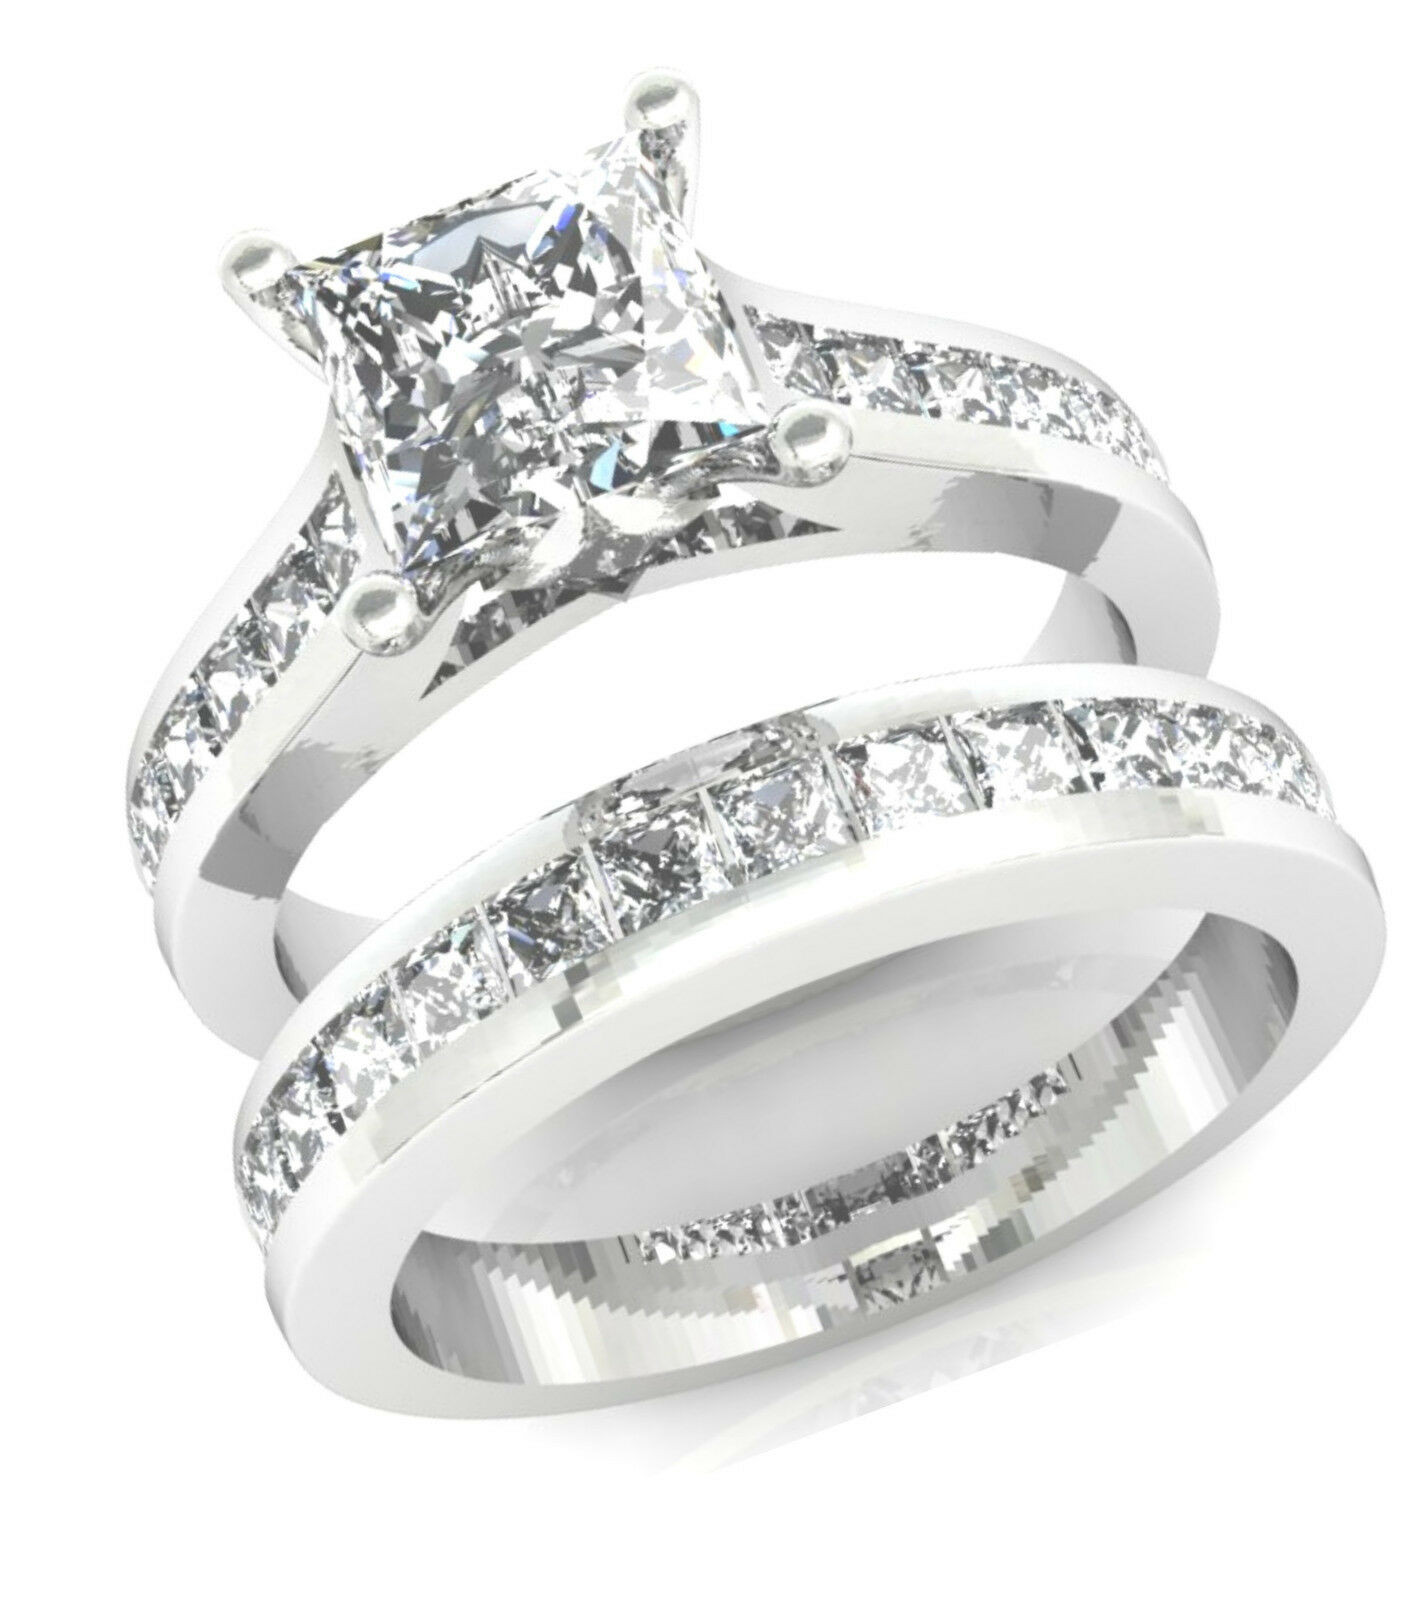 White Gold Princess Cut Engagement Ring
 3 2CT PRINCESS CUT CHANNEL SET ENGAGEMENT RING WEDDING